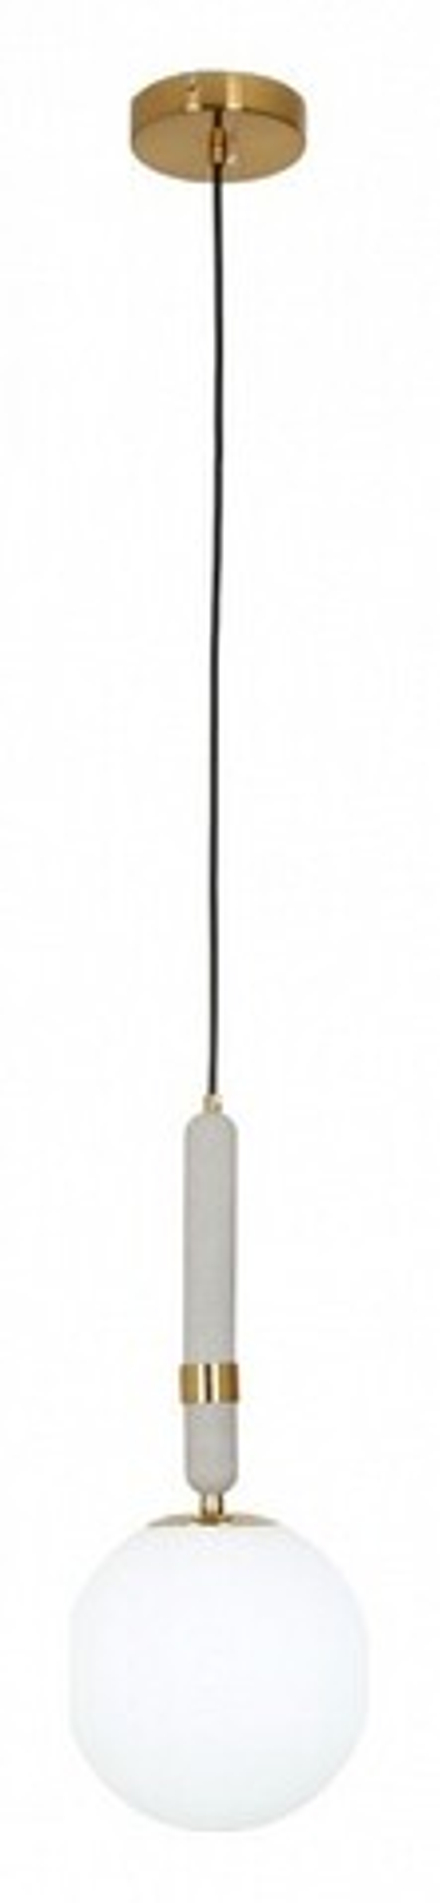 Подвесной светильник LUMINA DECO Granino LDP 6011-1 MD